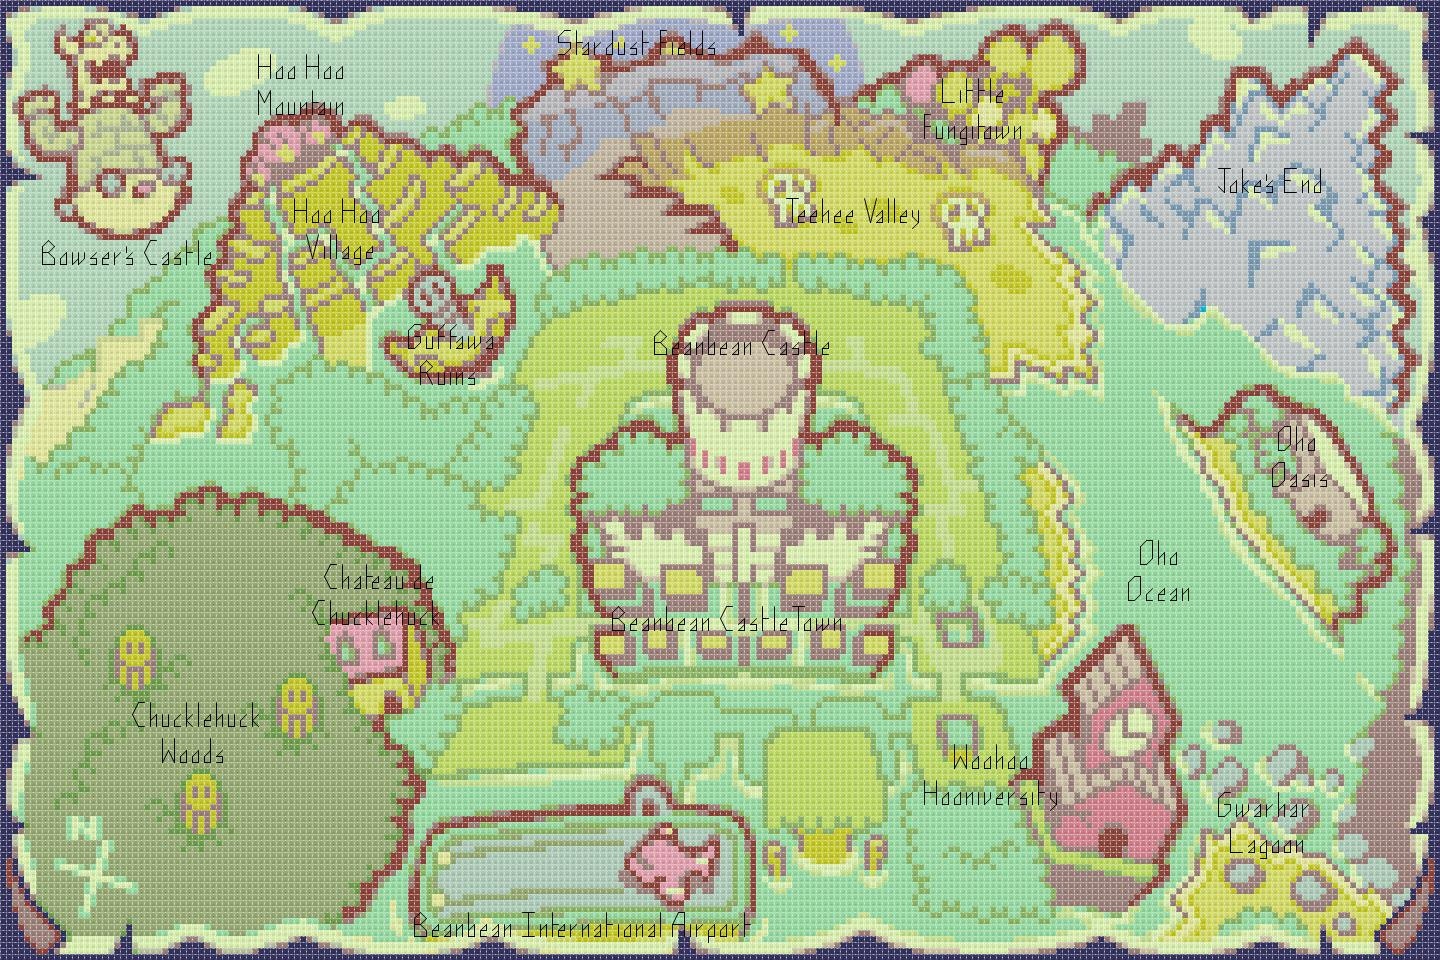 Mario and luigi superstar saga map